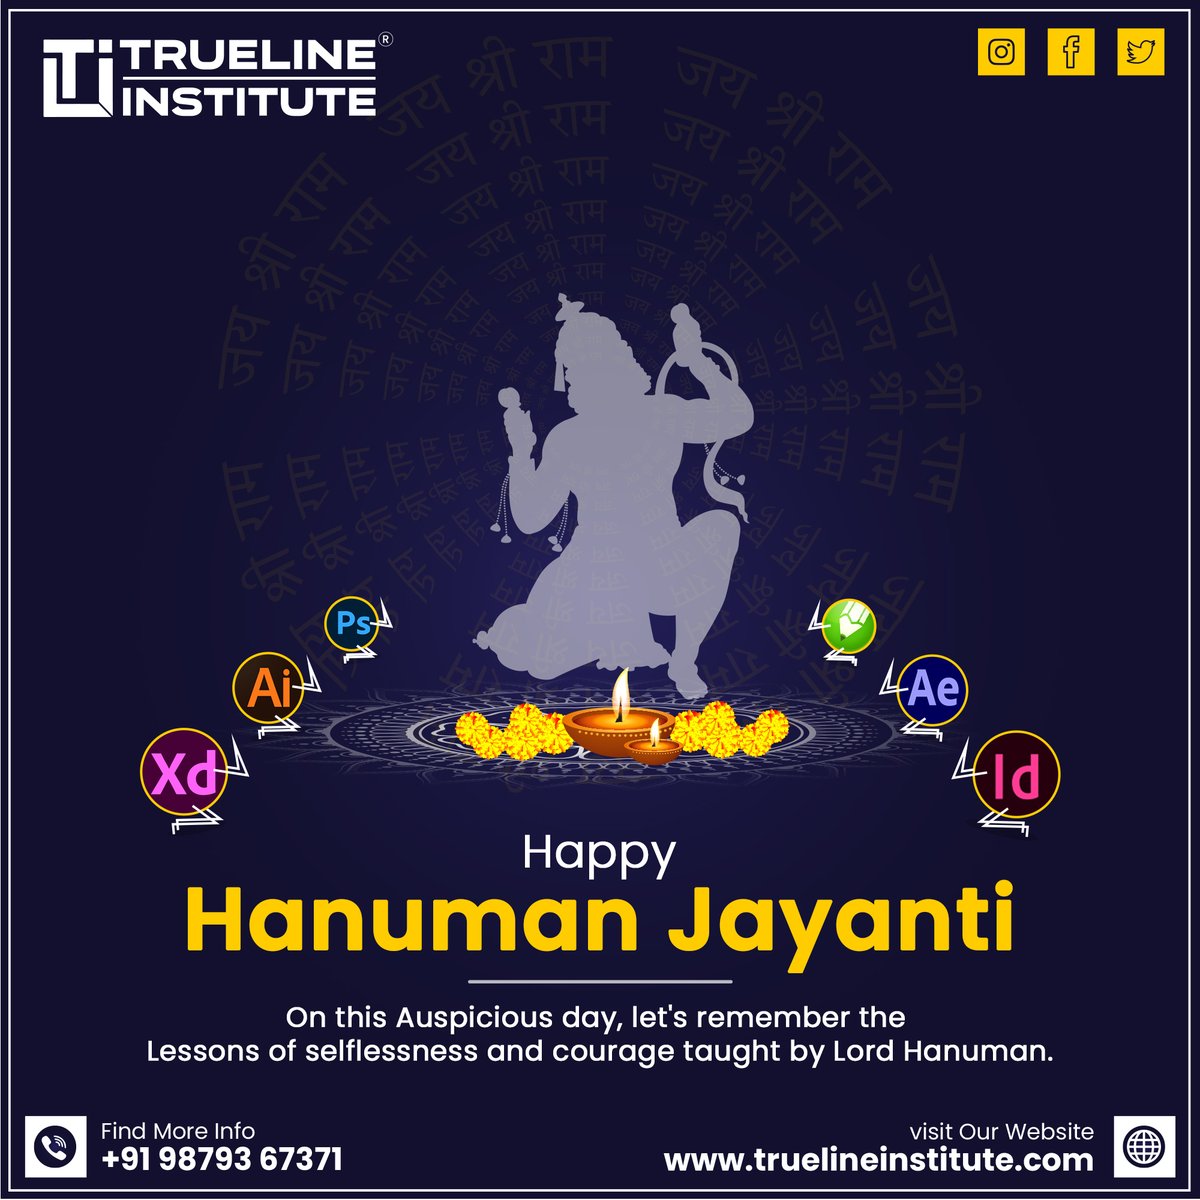 📢 Happy Hanuman Jayanti | Trueline Institute
Contact Details:
☎️ +91 98793 67371
🌐truelineinstitute.com
📧truelineinstitute@gmail.com
#truelineinstitute #institute #itcourses #hanumanjayanti #jaihanuman #bajrangbali #divinedevotion #lordhanuman #strengthanddevotion